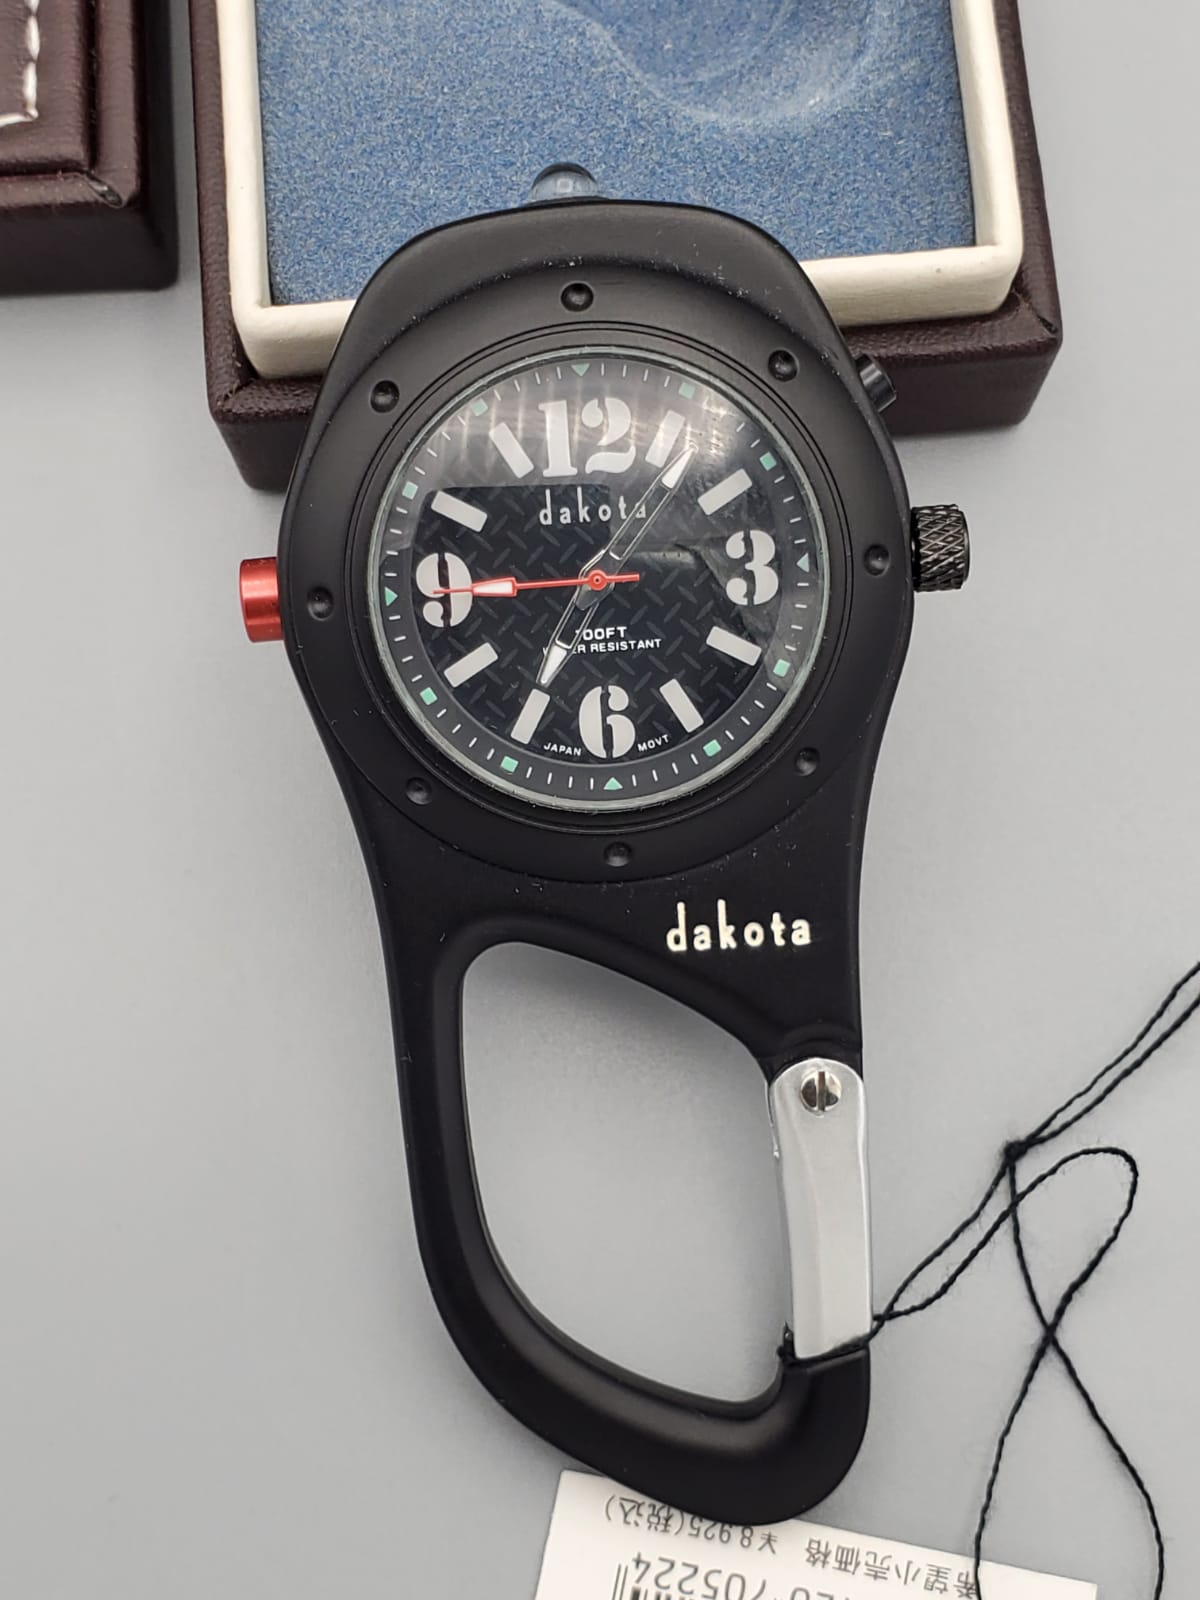 Dakota Miniclip Military Pocket Watch